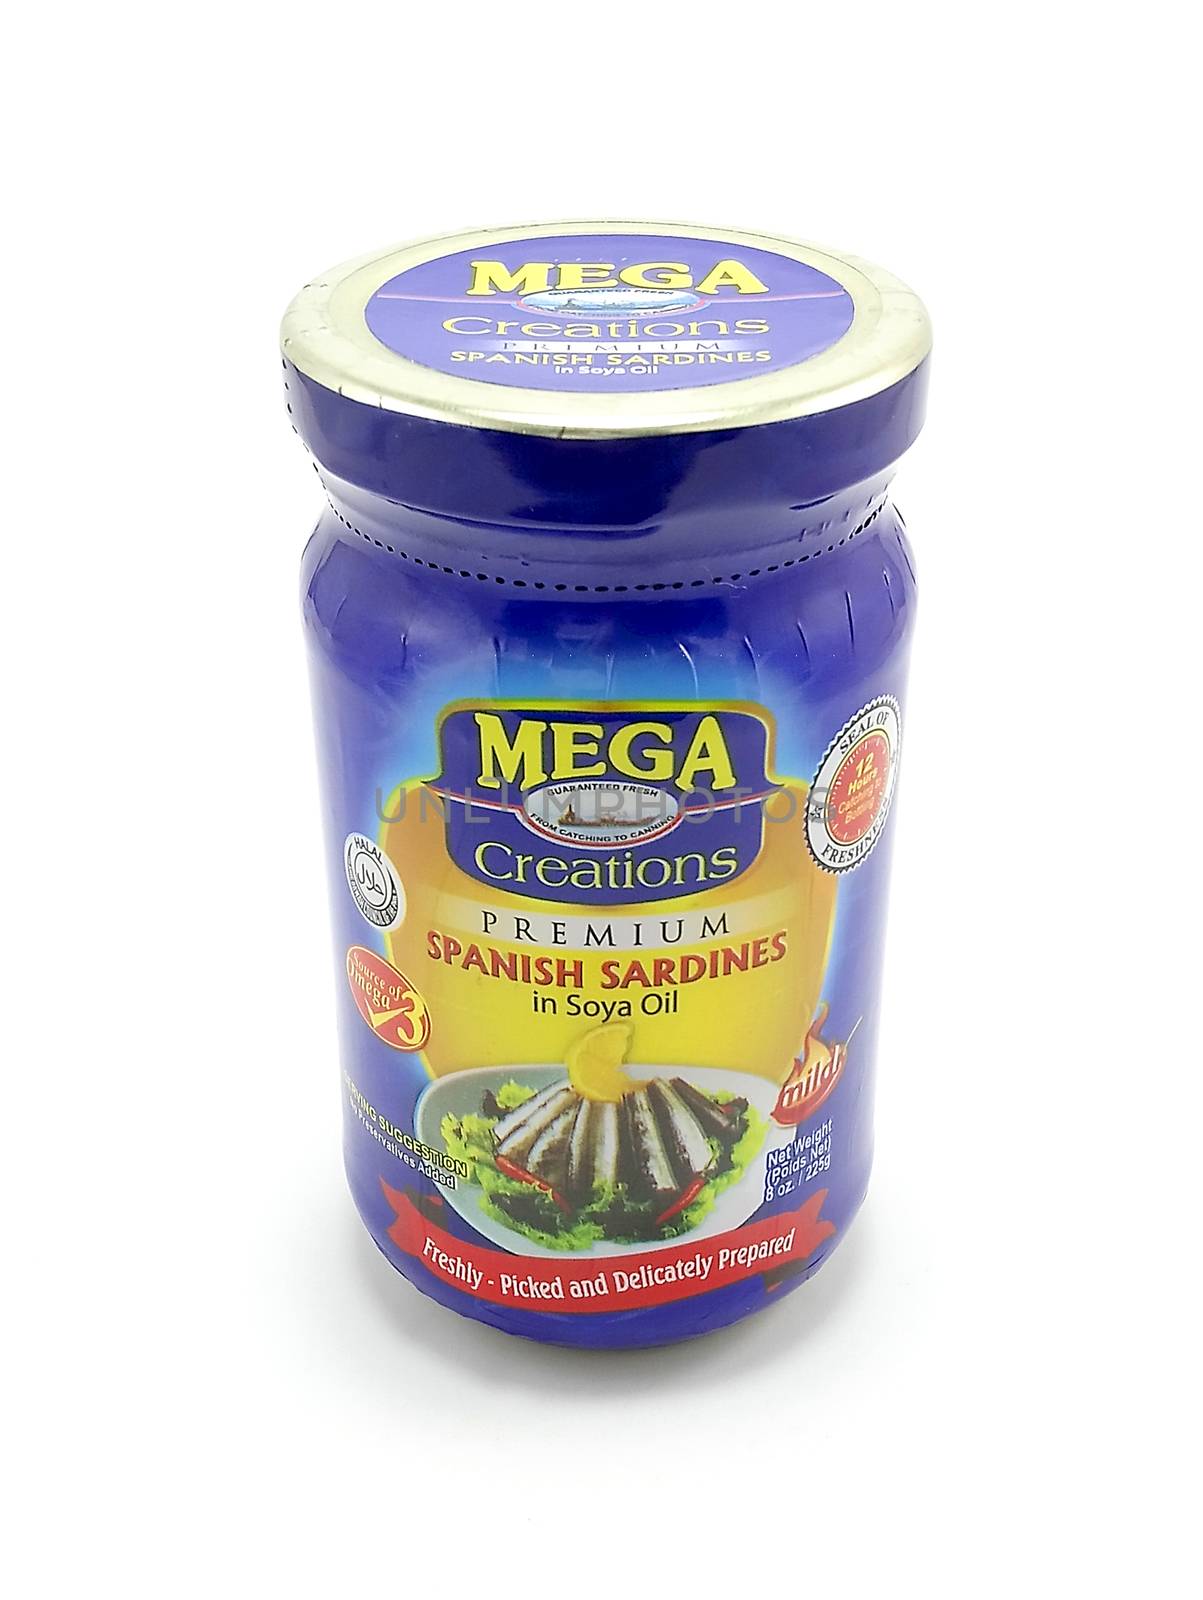 MANILA, PH - JUNE 23 - Mega creations premium spanish sardines in soya oil on June 23, 2020 in Manila, Philippines.